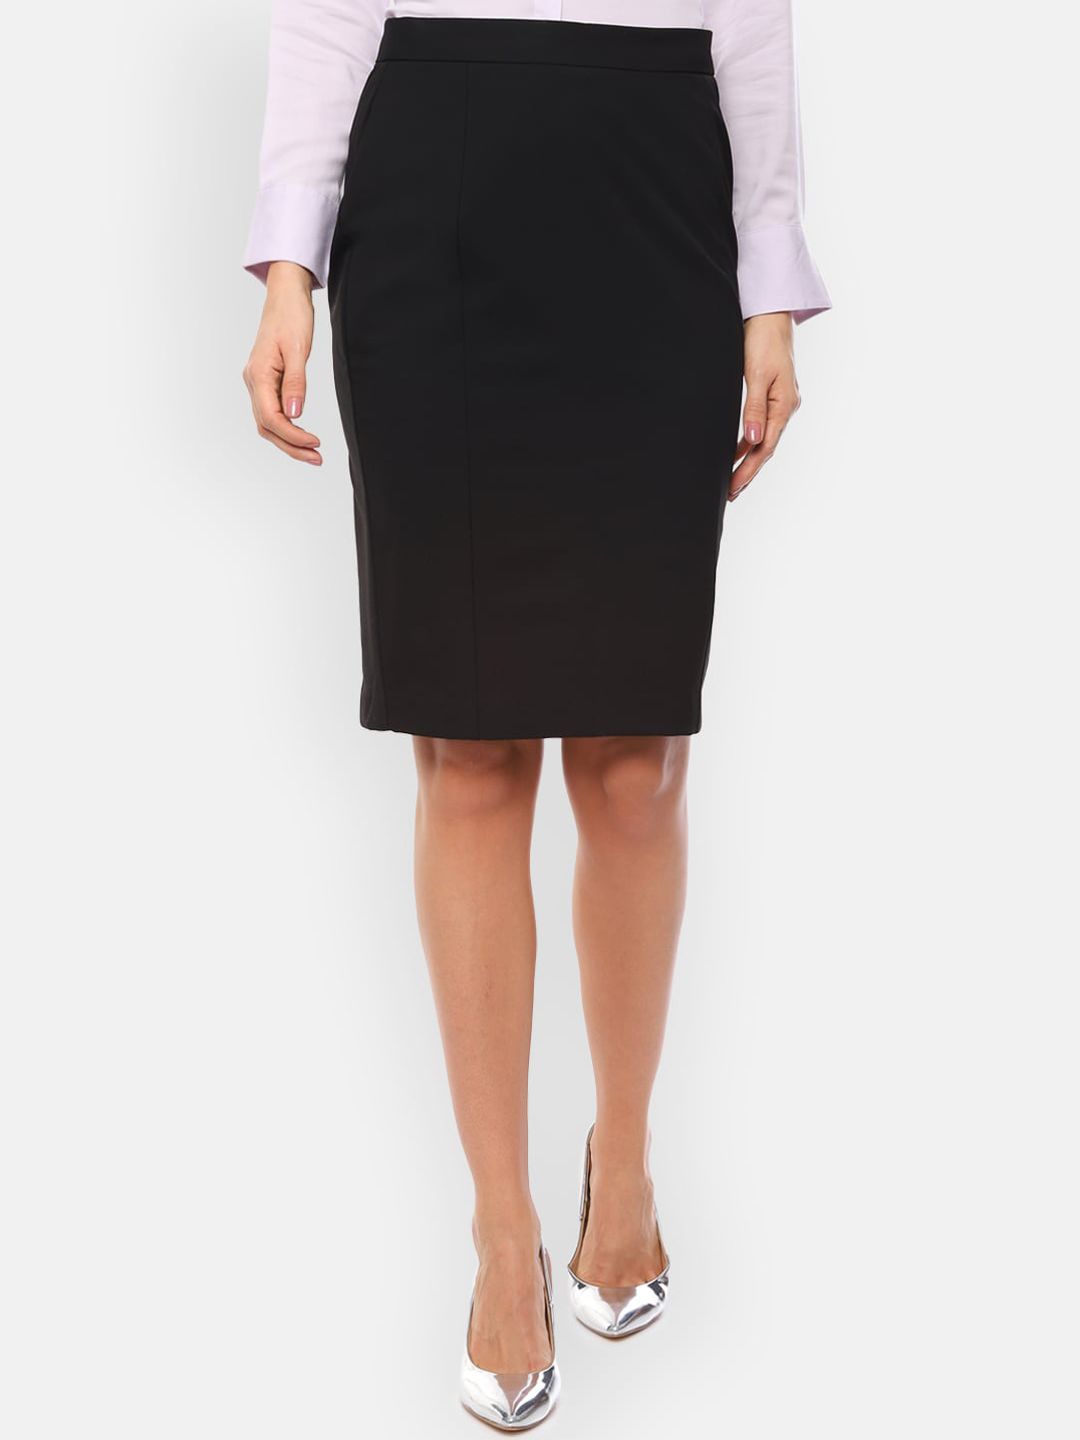 Van Heusen Woman Black Formal Pencil Skirt Price in India